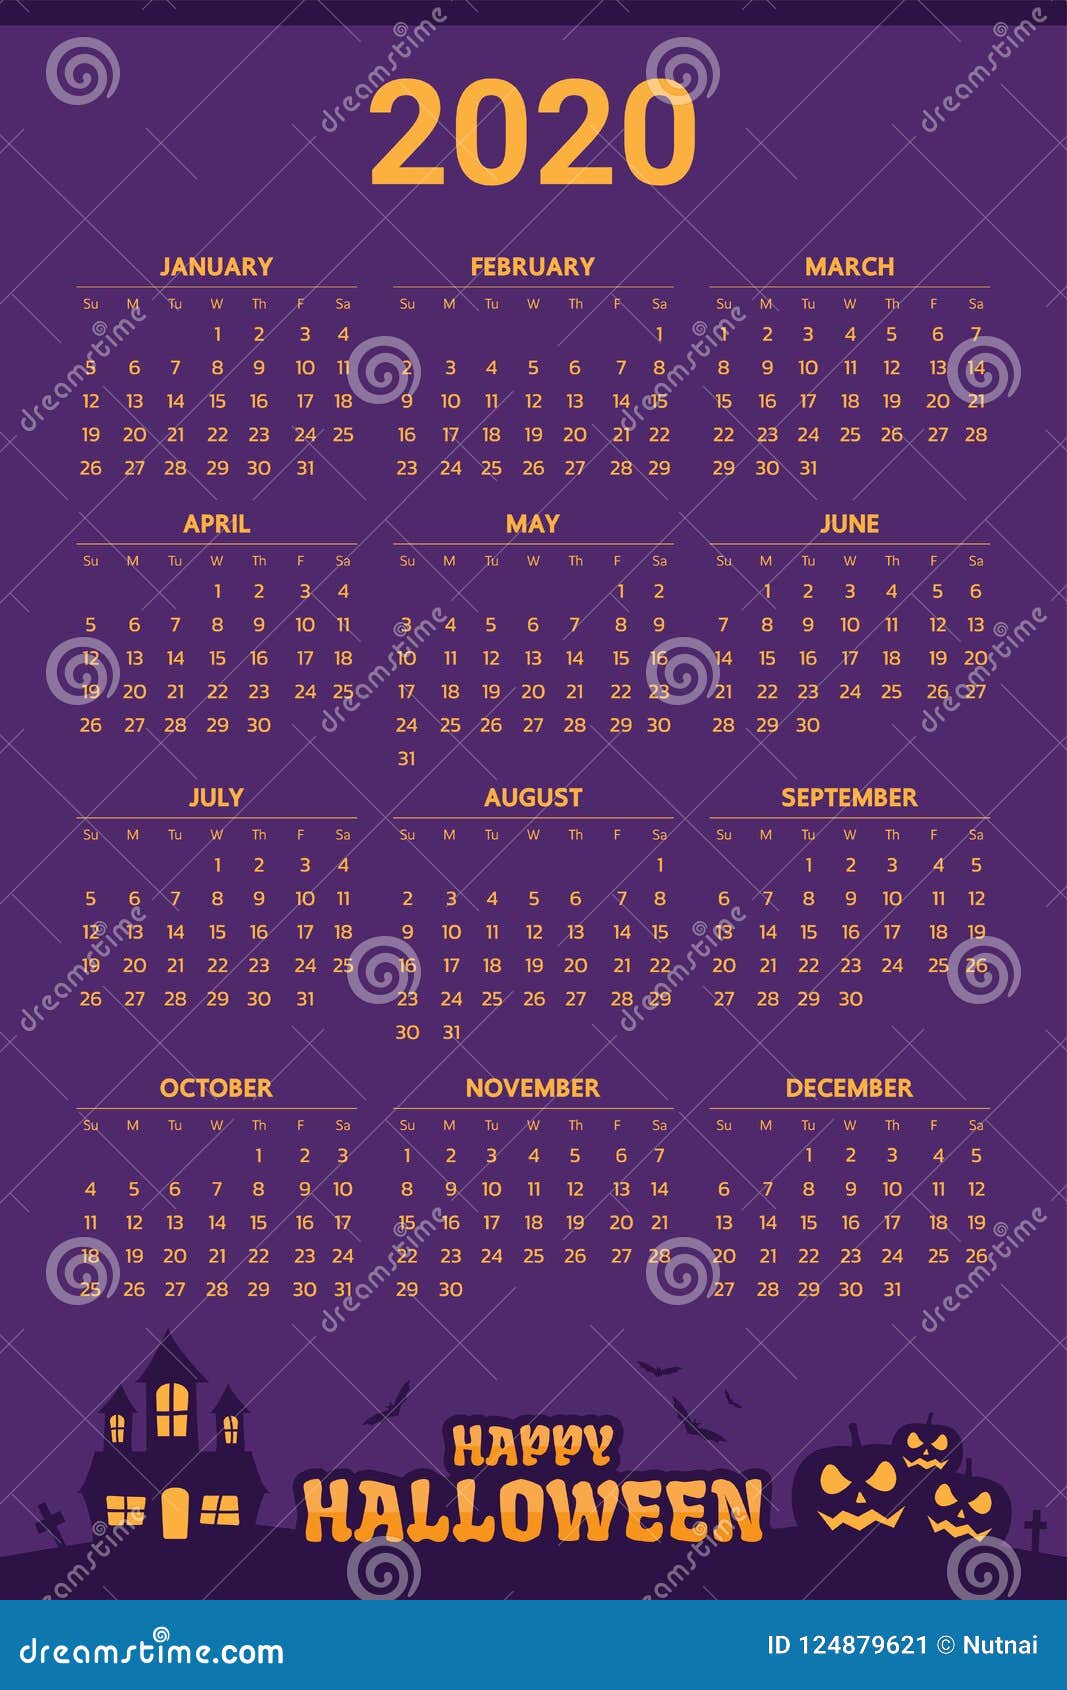 calendar halloween 2020 2020 Calendar With Halloween Theme Vector Stock Vector Illustration Of Month August 124879621 calendar halloween 2020